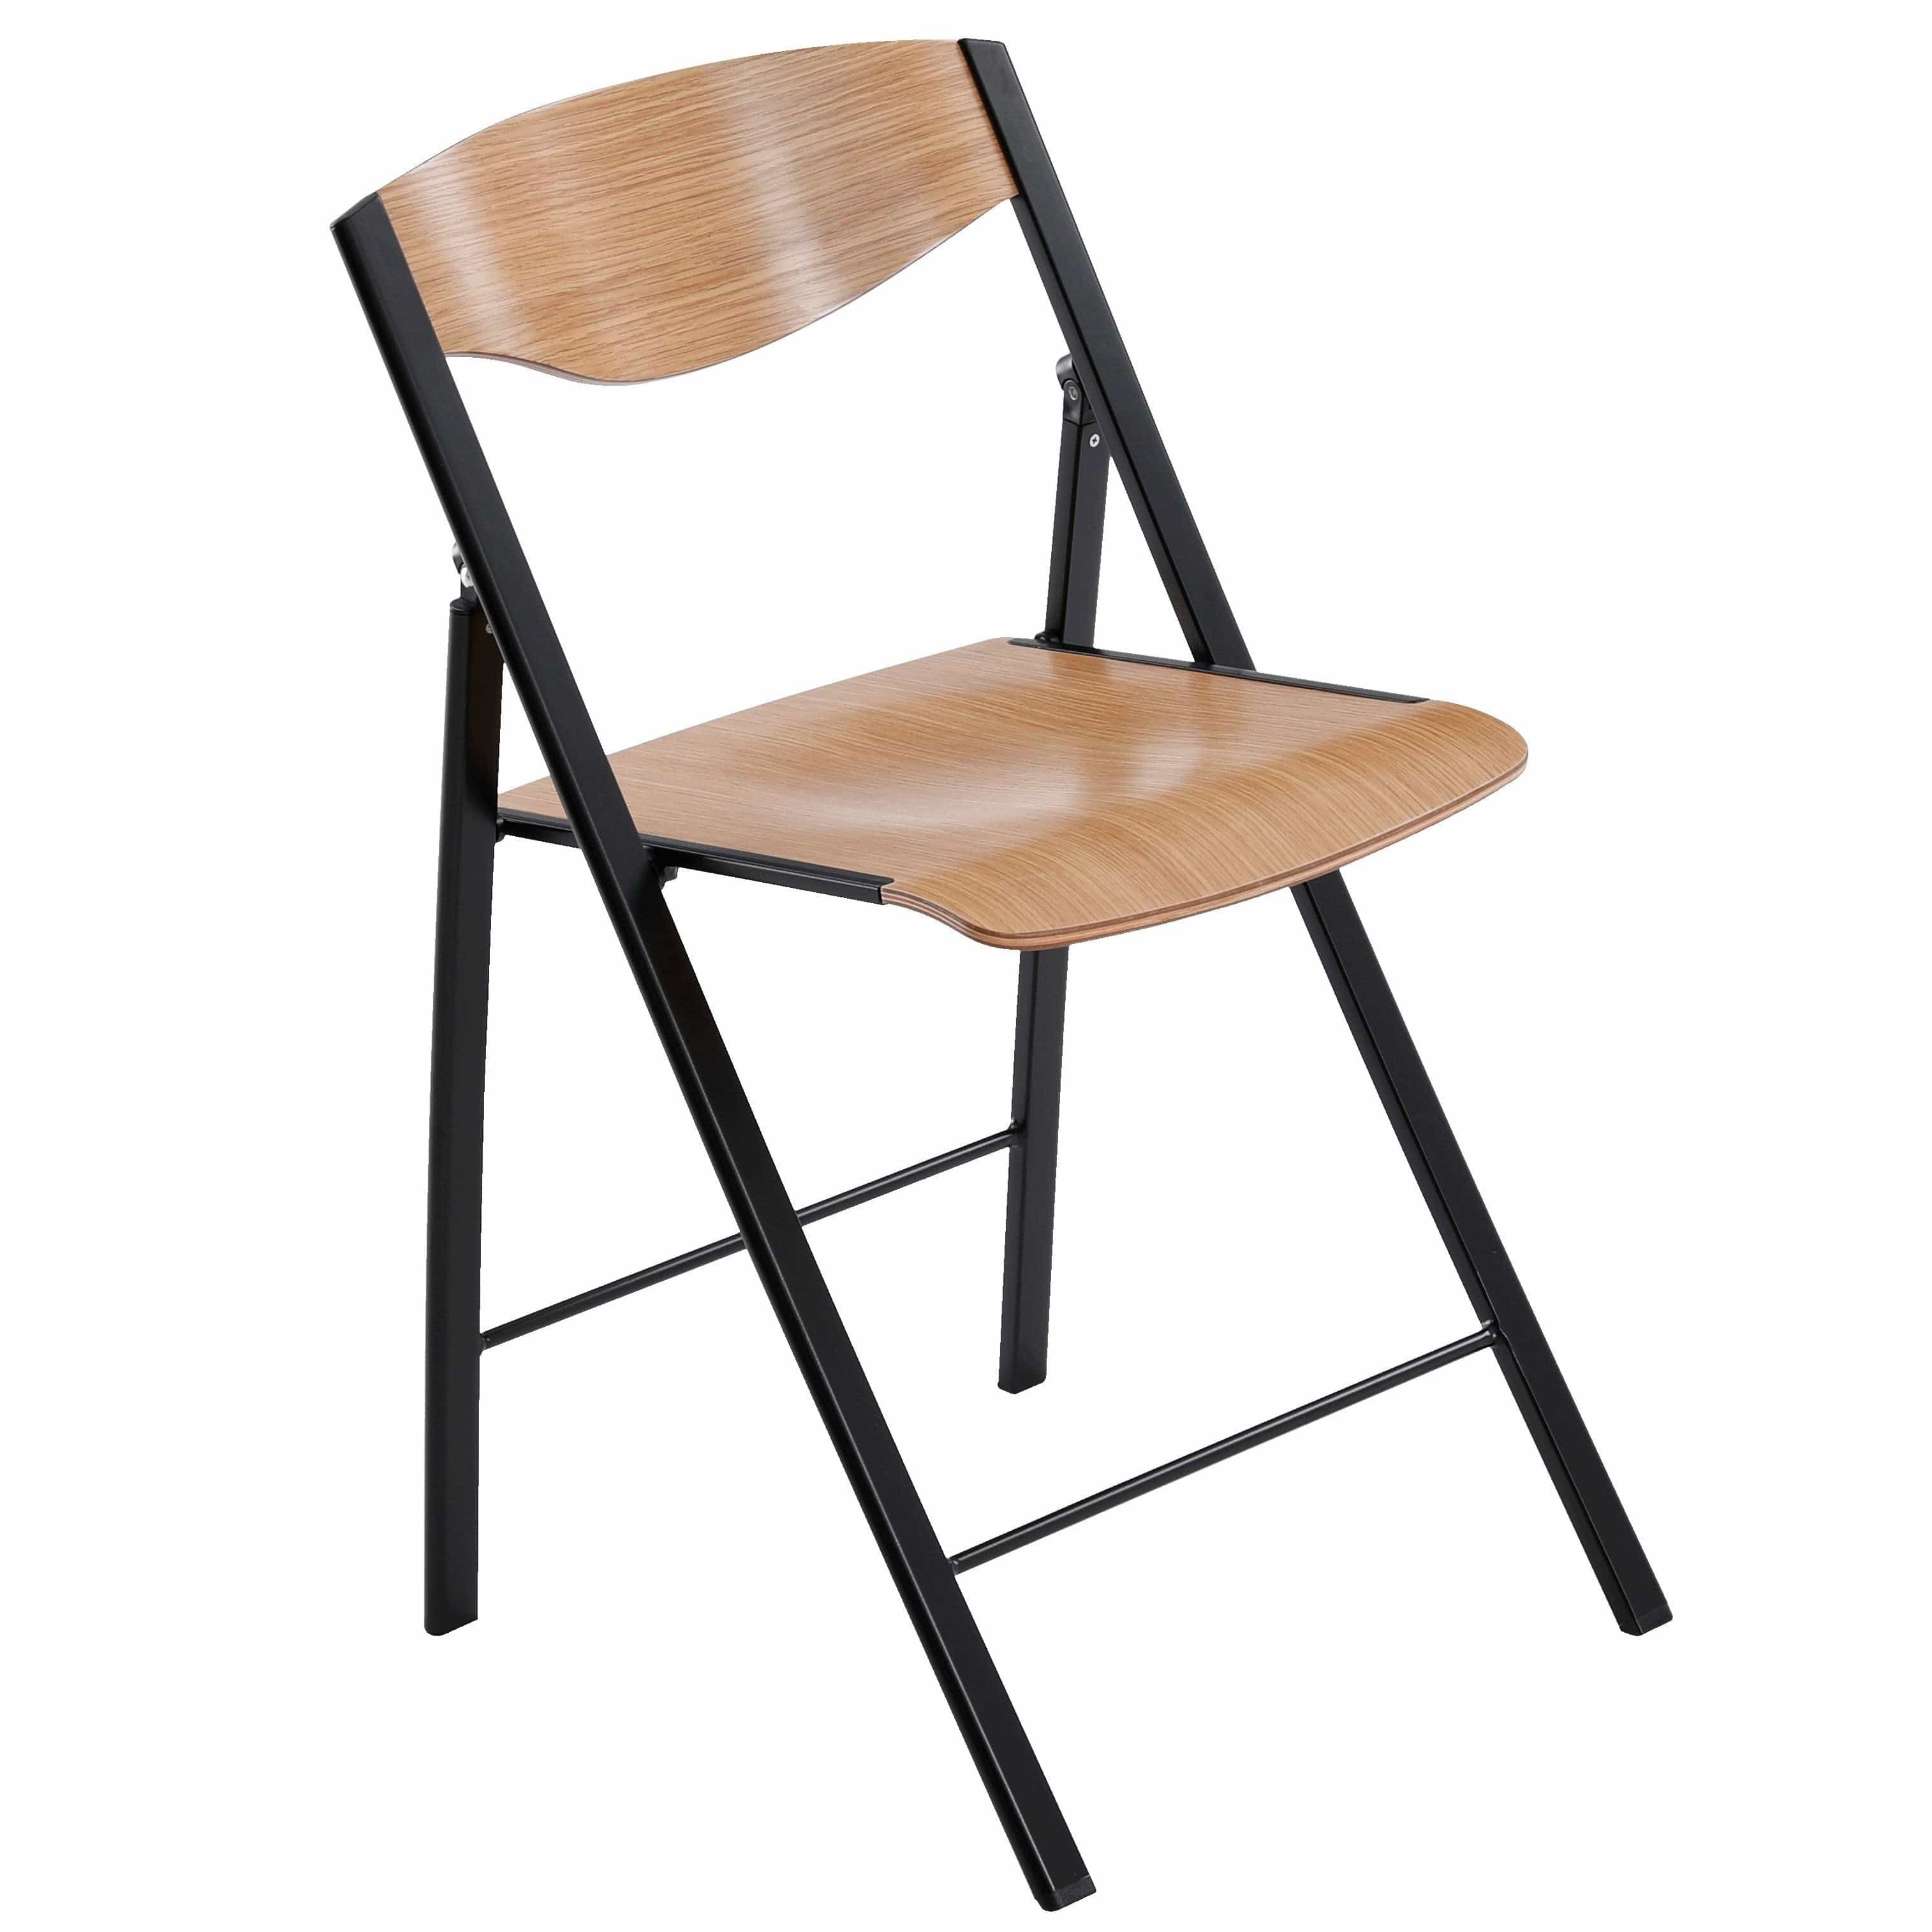 Foldees Boston model designer folding chair, black metal frame, teak color solid wood seat, matching teak wood stylish rounded backrest,  designer folding chair כסא מתקפל מעוצב מסגרת צבע שחור ומושב וגב מעוגל עץ  מלא בגוון טיק